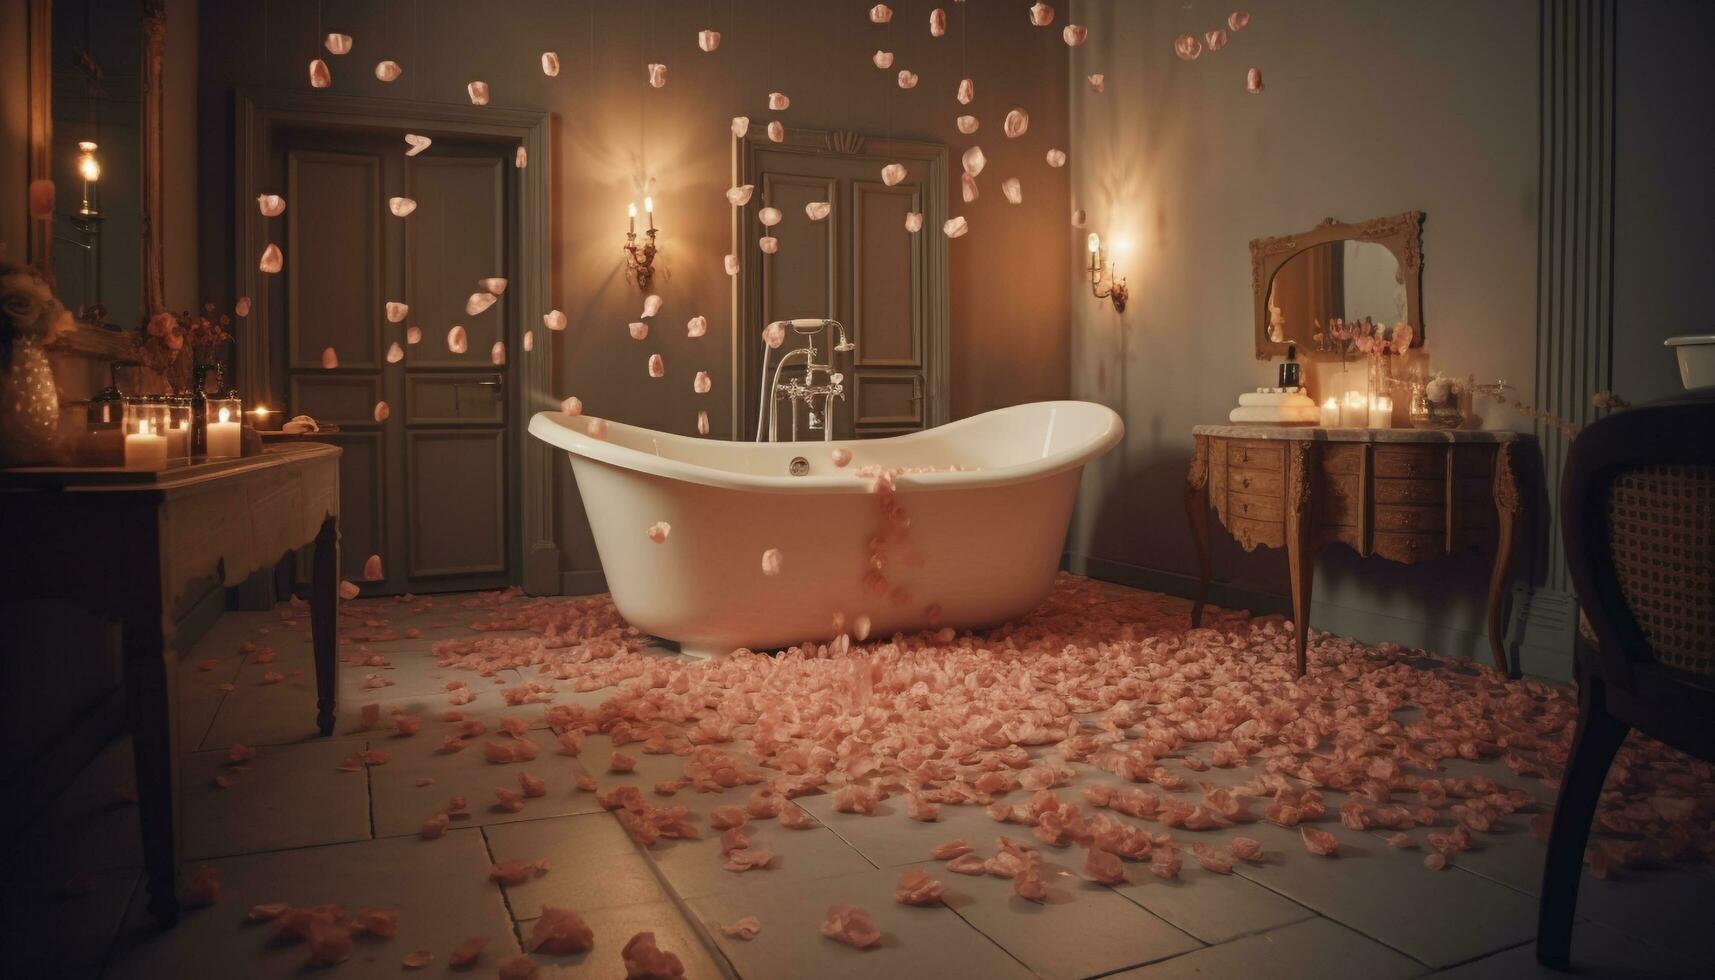 Modern luxury bathroom design with elegant marble flooring and bathtub generated by AI photo